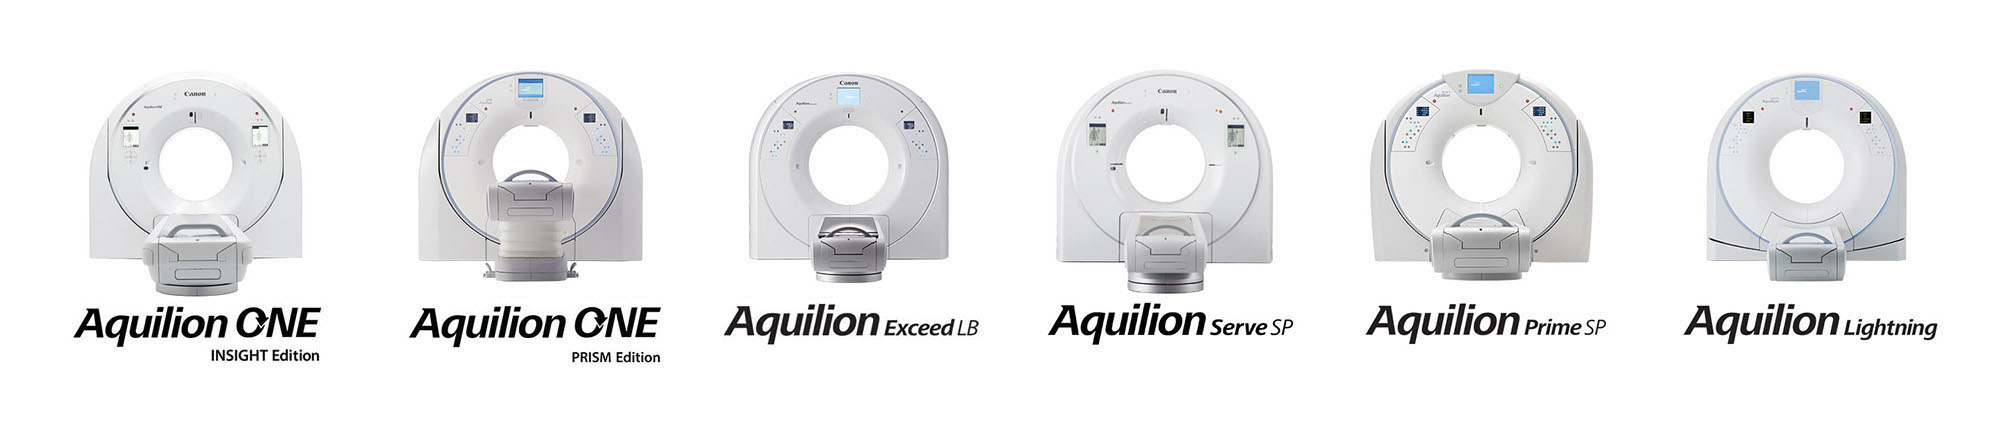 Aquilion ONE / Prism Edition, Aquilion Exceed LB, Aquilion Prime SP, Aquilion Lightning